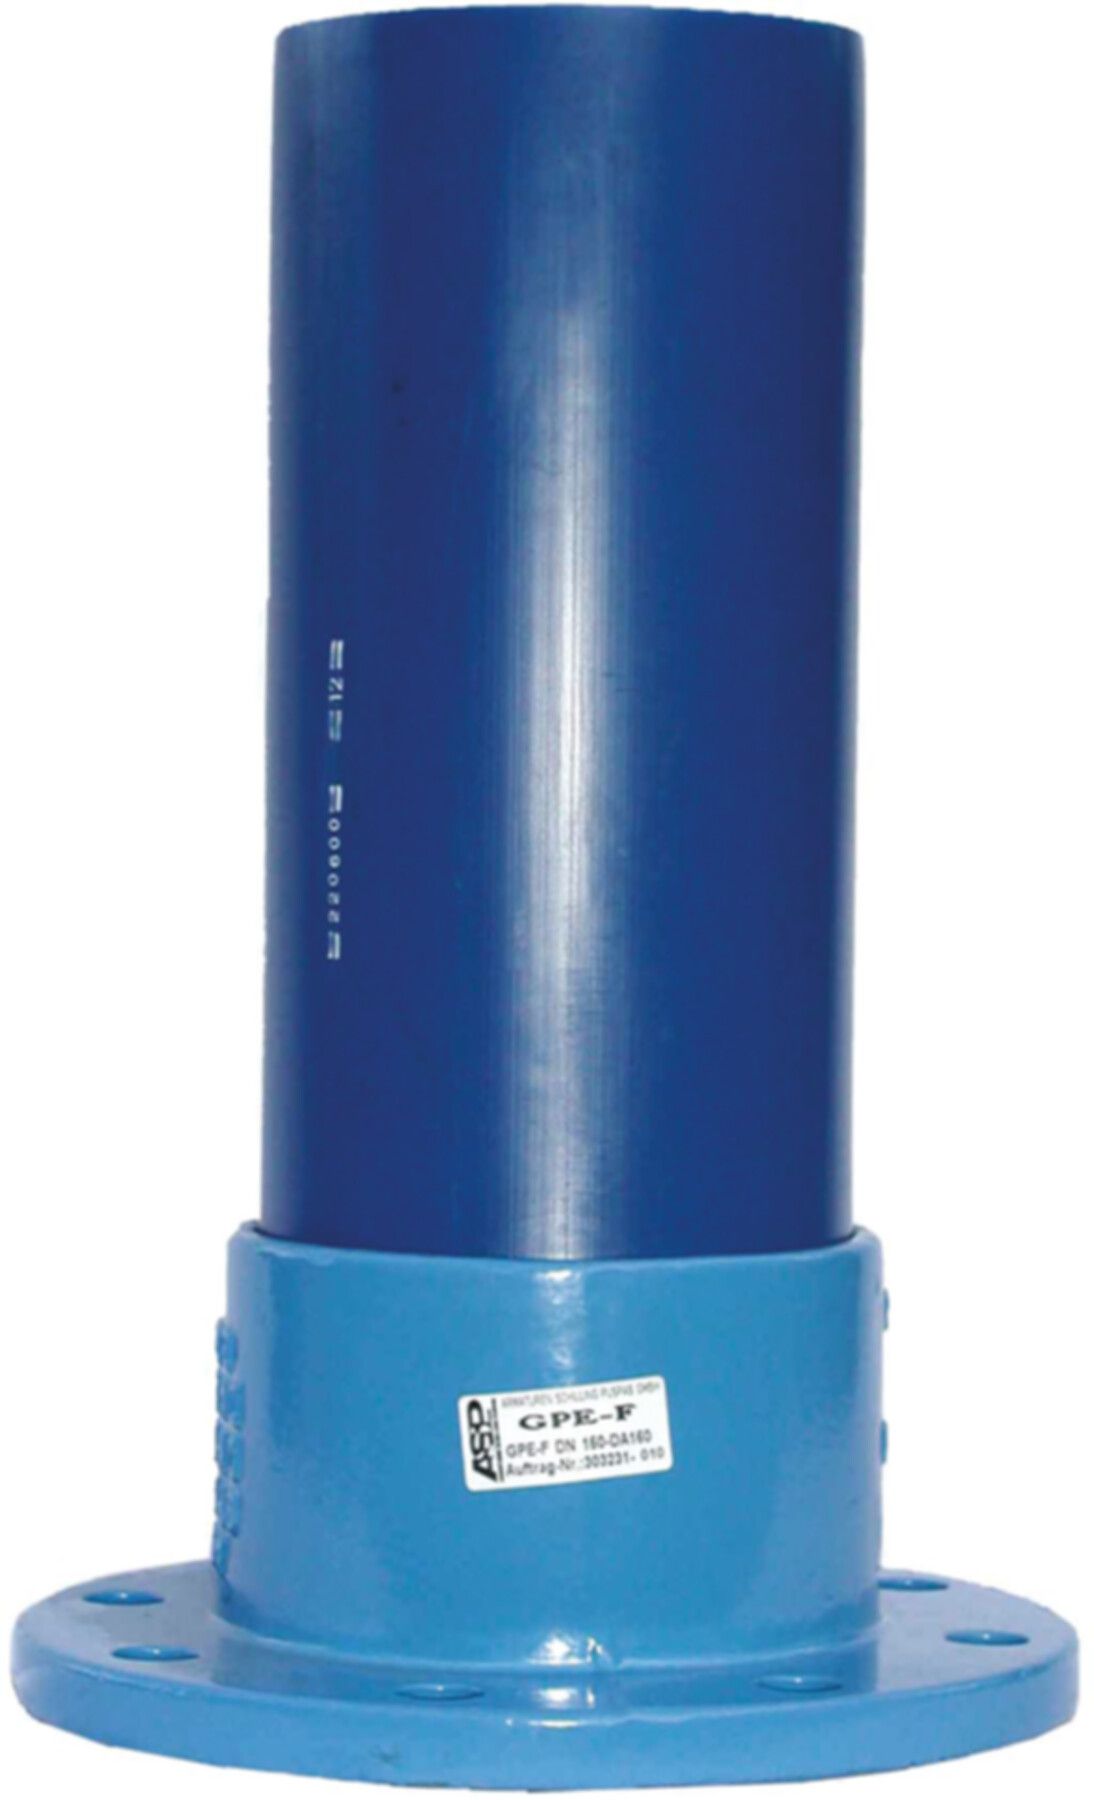 Übergangsstück Flansch-PE GPE PE100 S5 für Wasser PN 10/16 DN 50 / d 63mm - Frischhut Steckmuffenformstücke